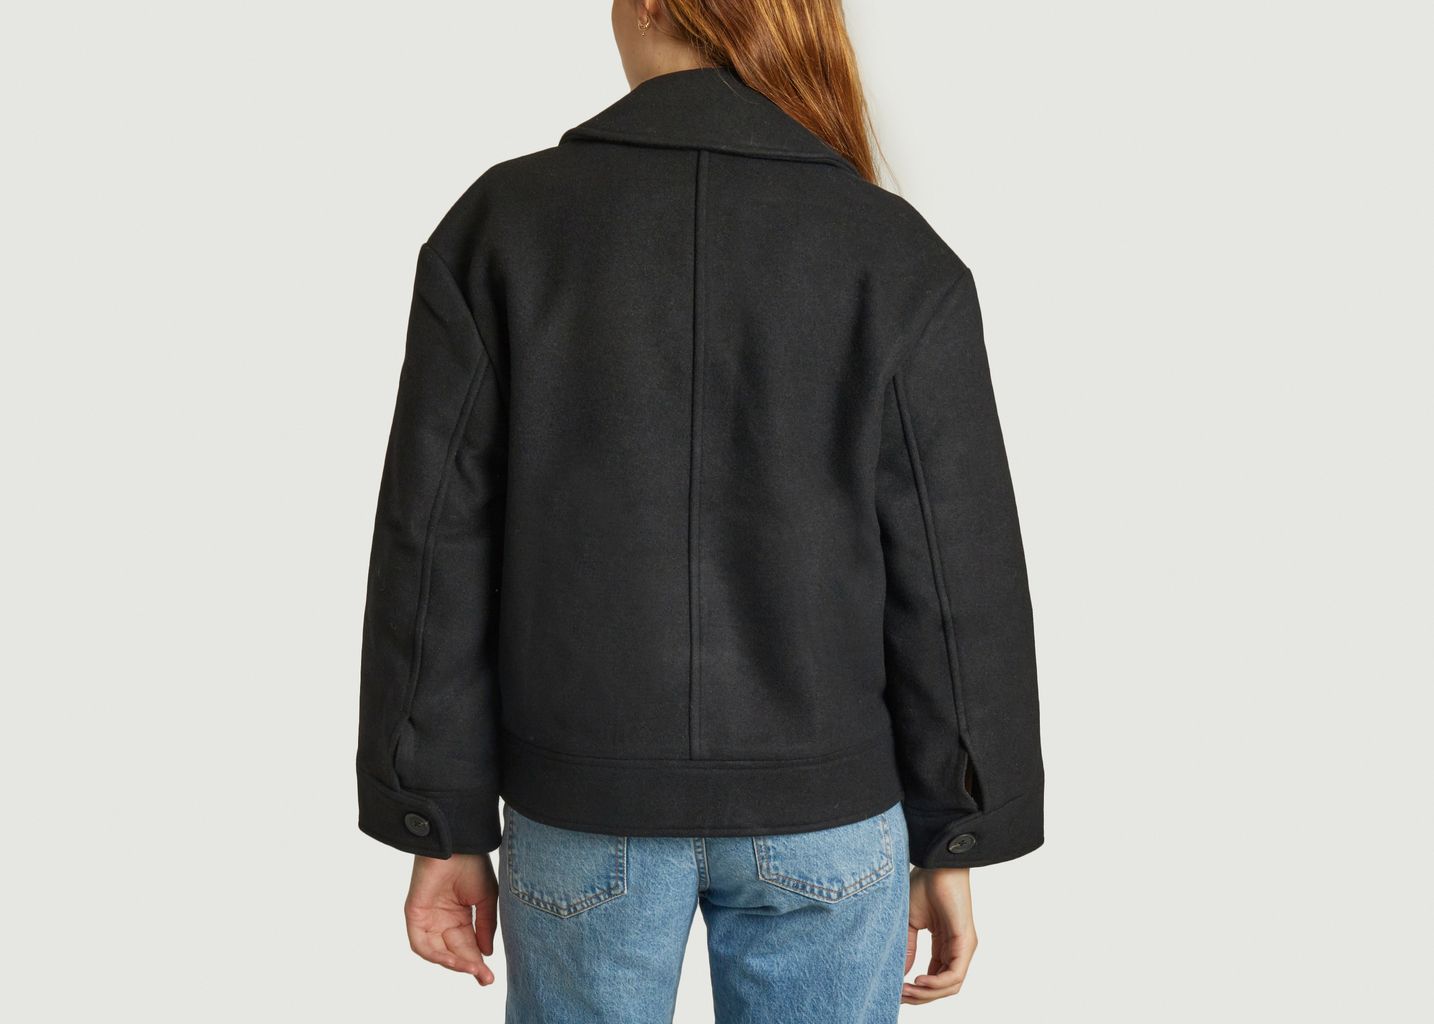 Sogano New jacket  - Second Female